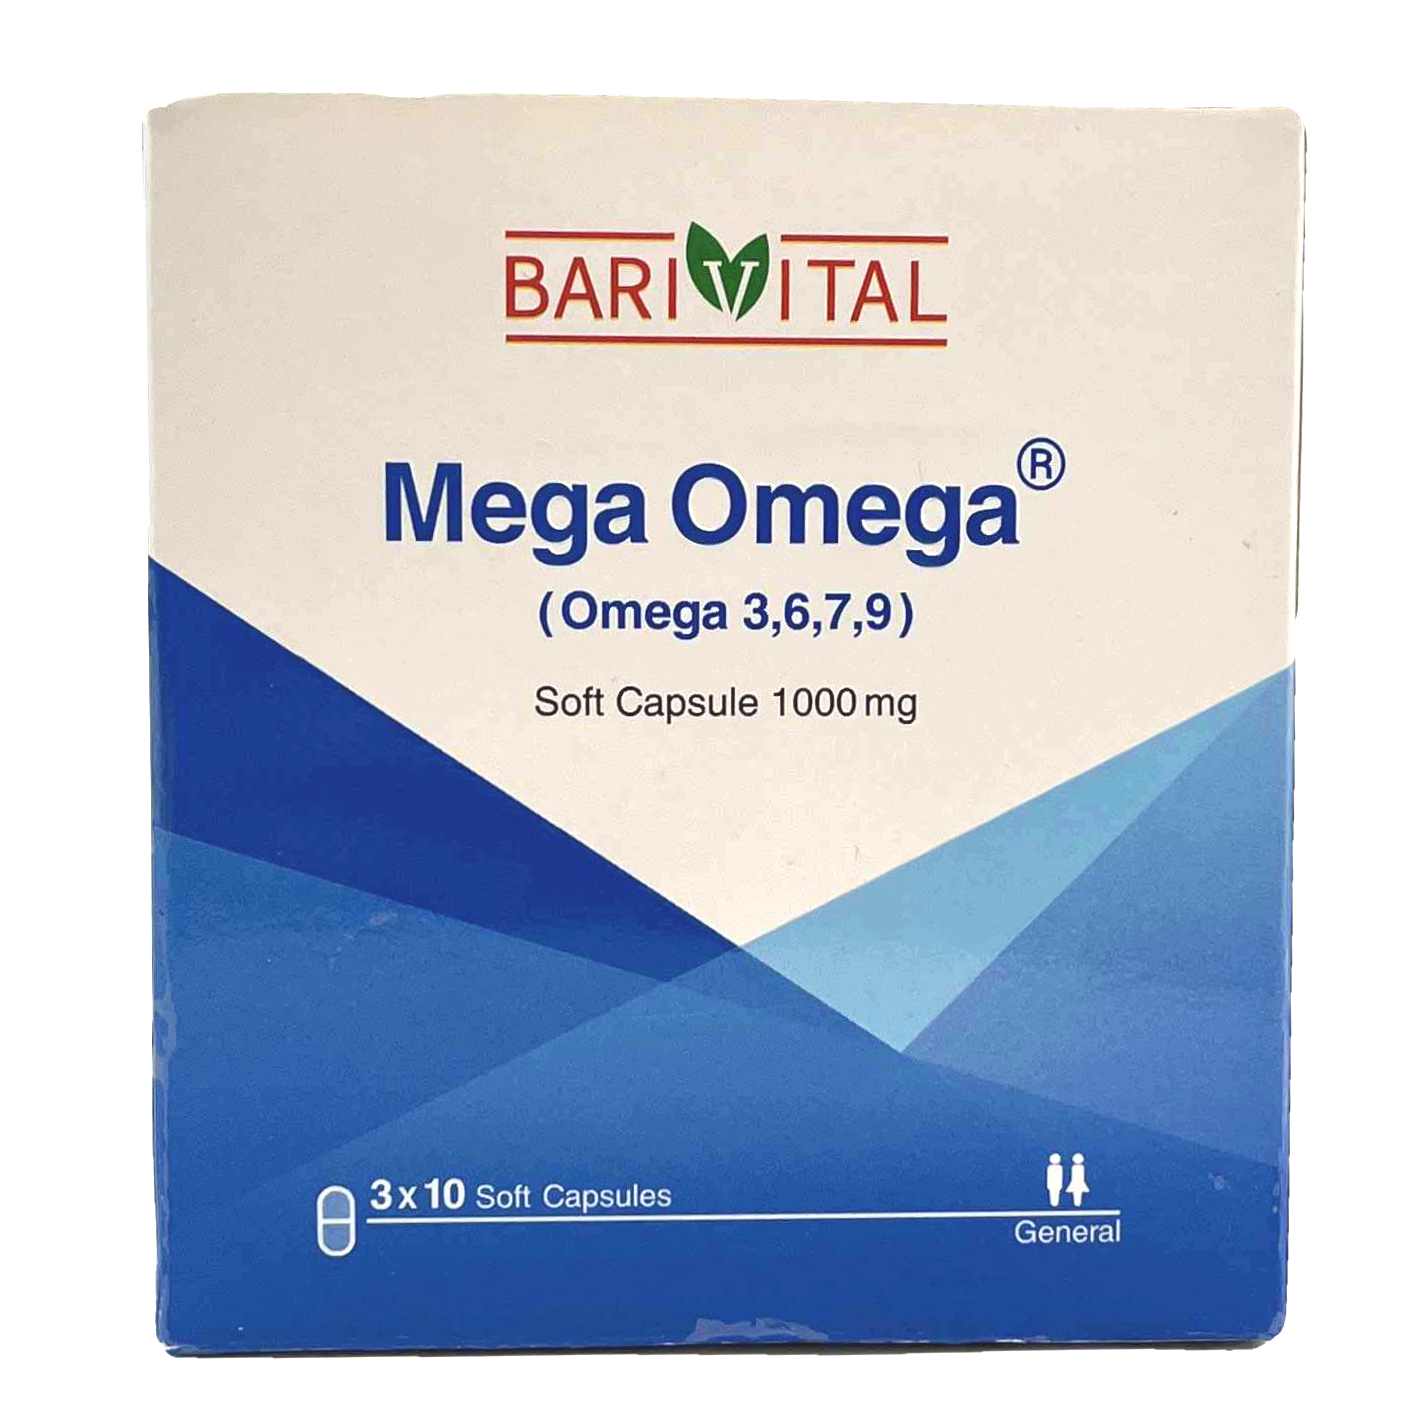 سافت ژل مگا امگا باریویتال Mega omega Barivital